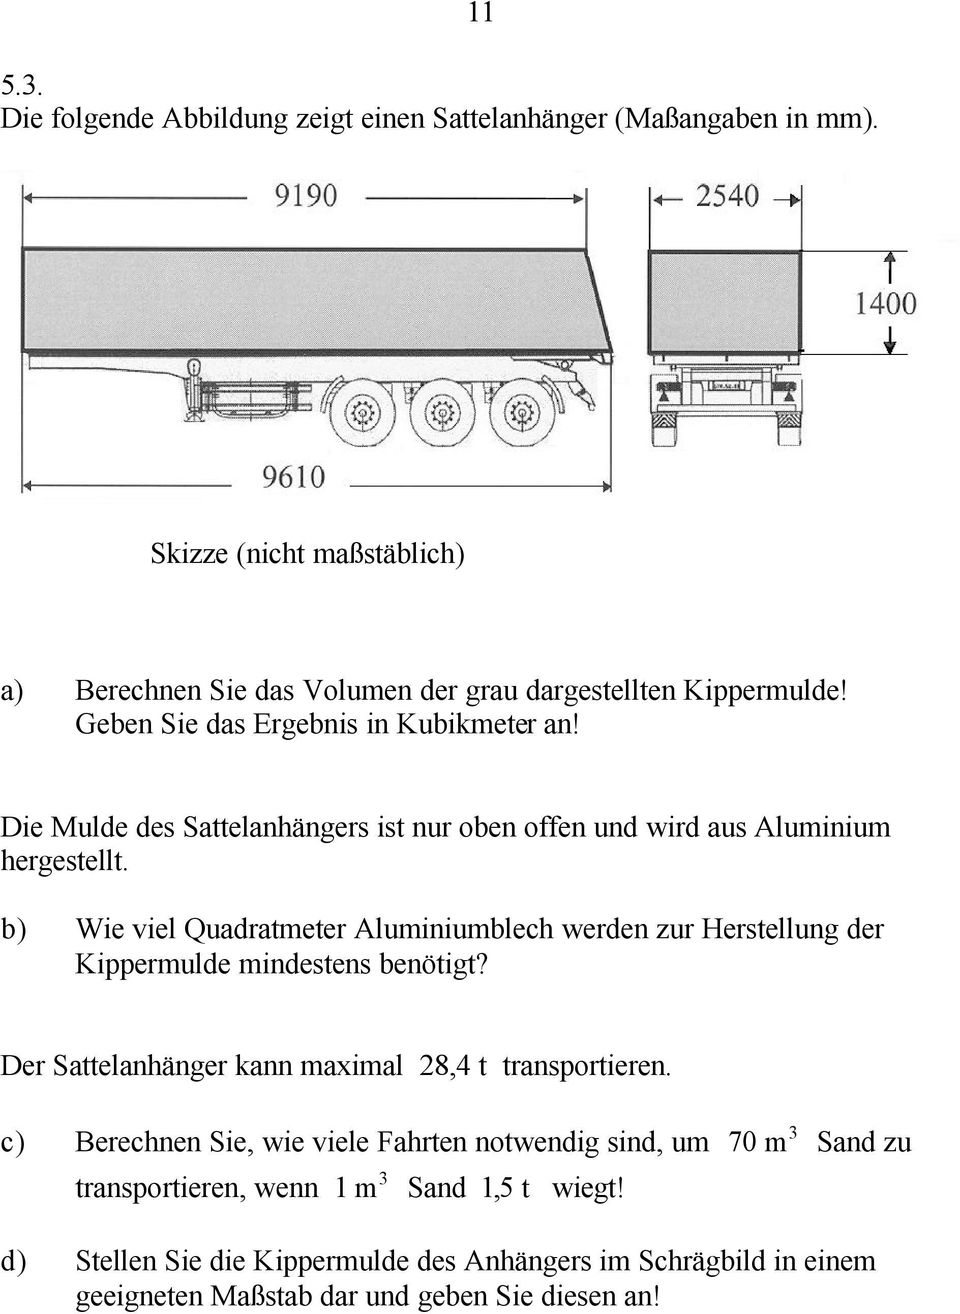 b) Wie viel Quadratmeter Aluminiumblech werden zur Herstellung der Kippermulde mindestens benötigt? Der Sattelanhänger kann maximal 28,4 t transportieren.